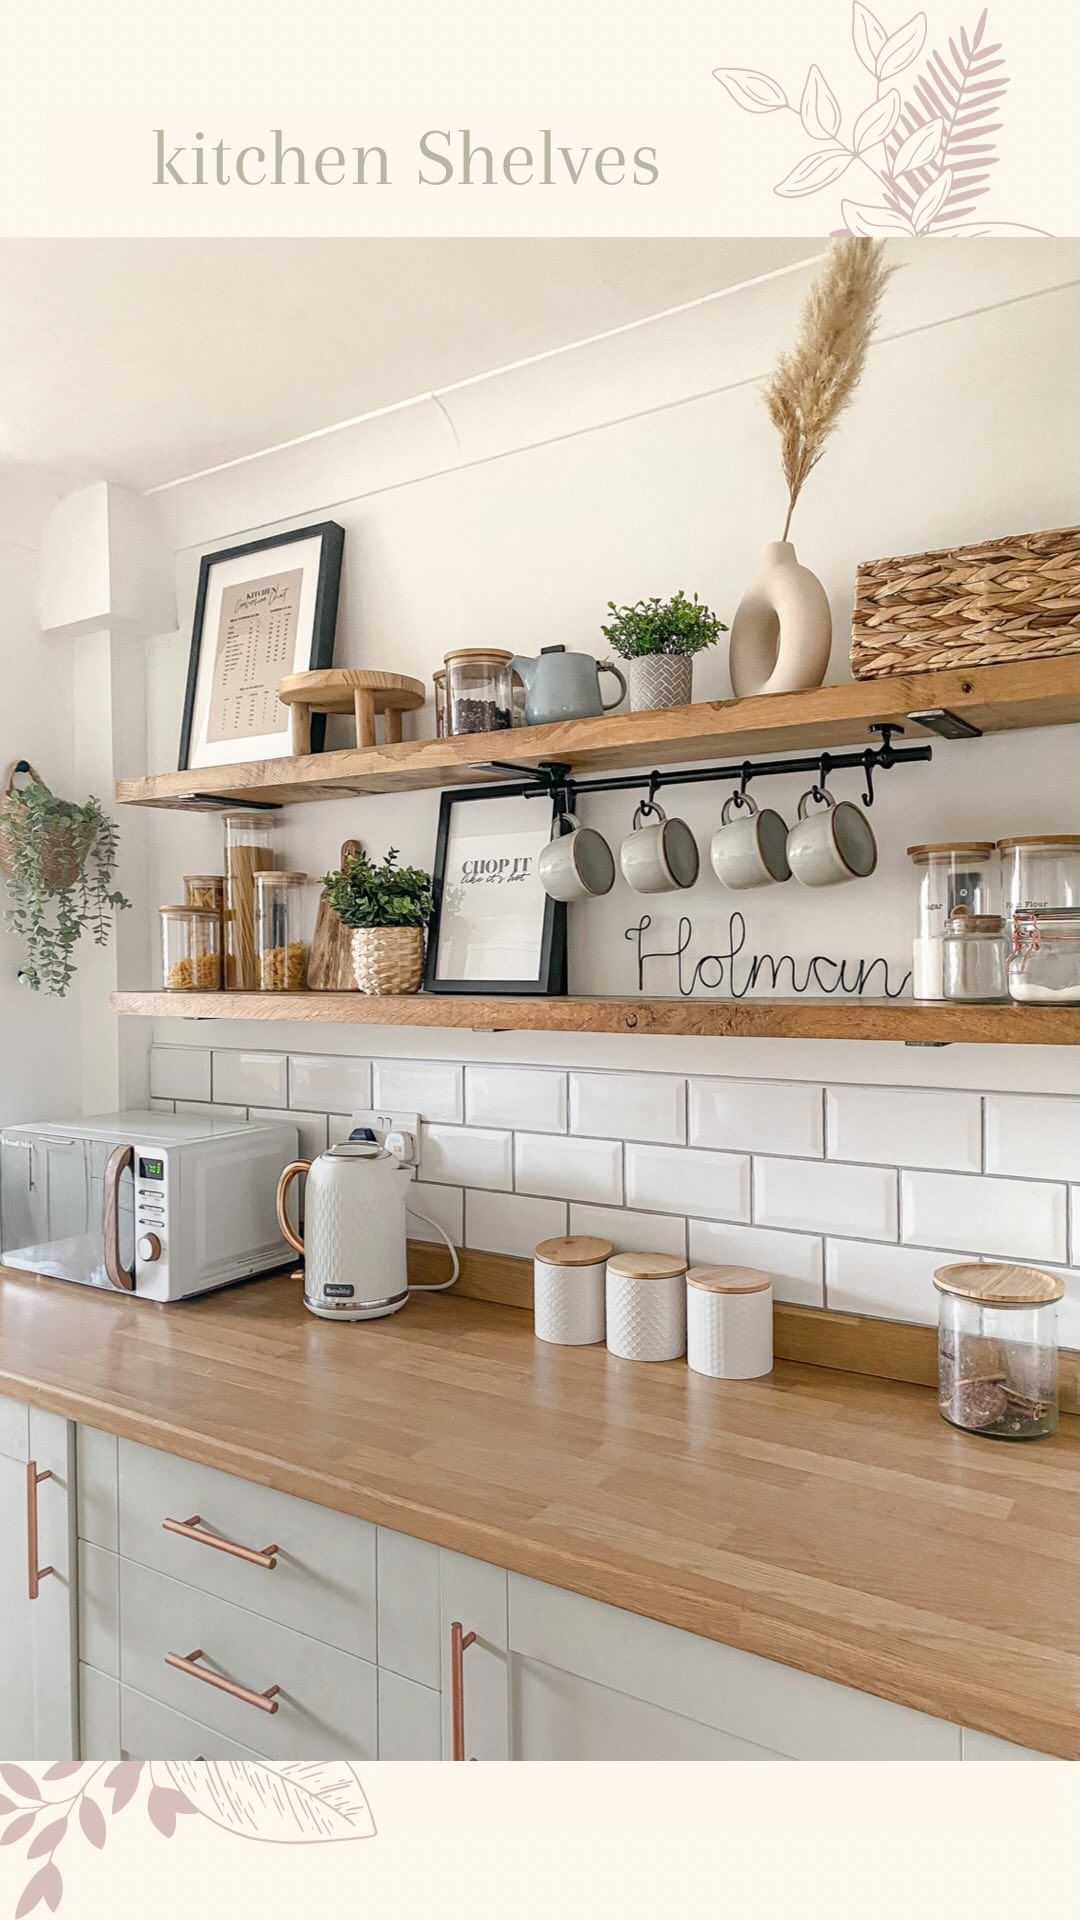 Kitchen Shelves Maximize Space and Organization with Stylish Kitchen Storage Options